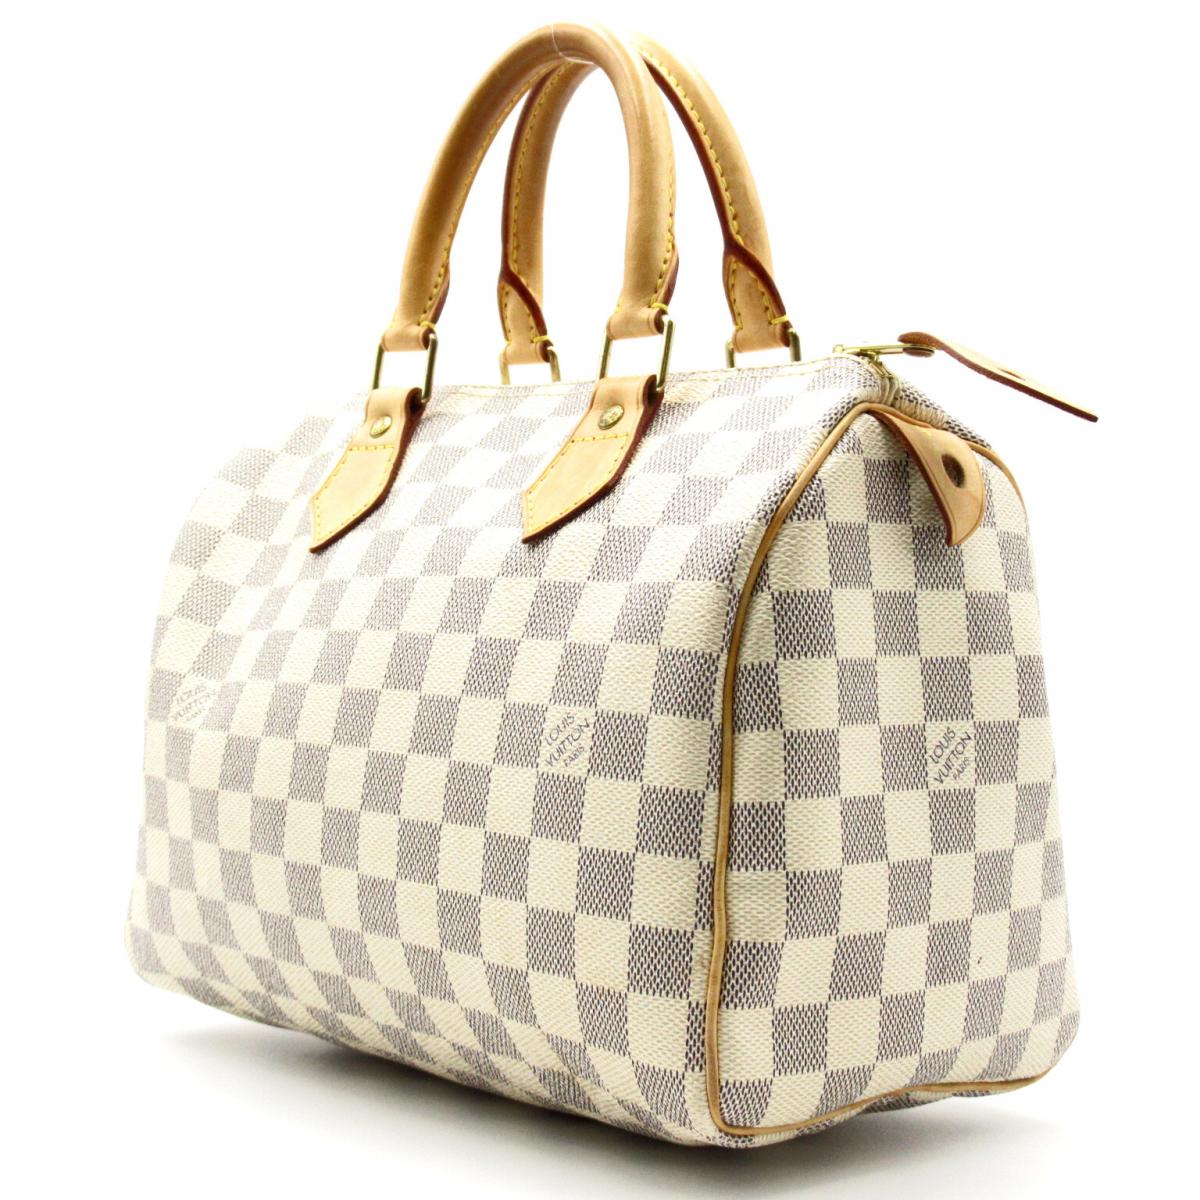 Louis Vuitton SPEEDY 25 Handbag White Damier Azur Canvas Bag N41534 - GOOD